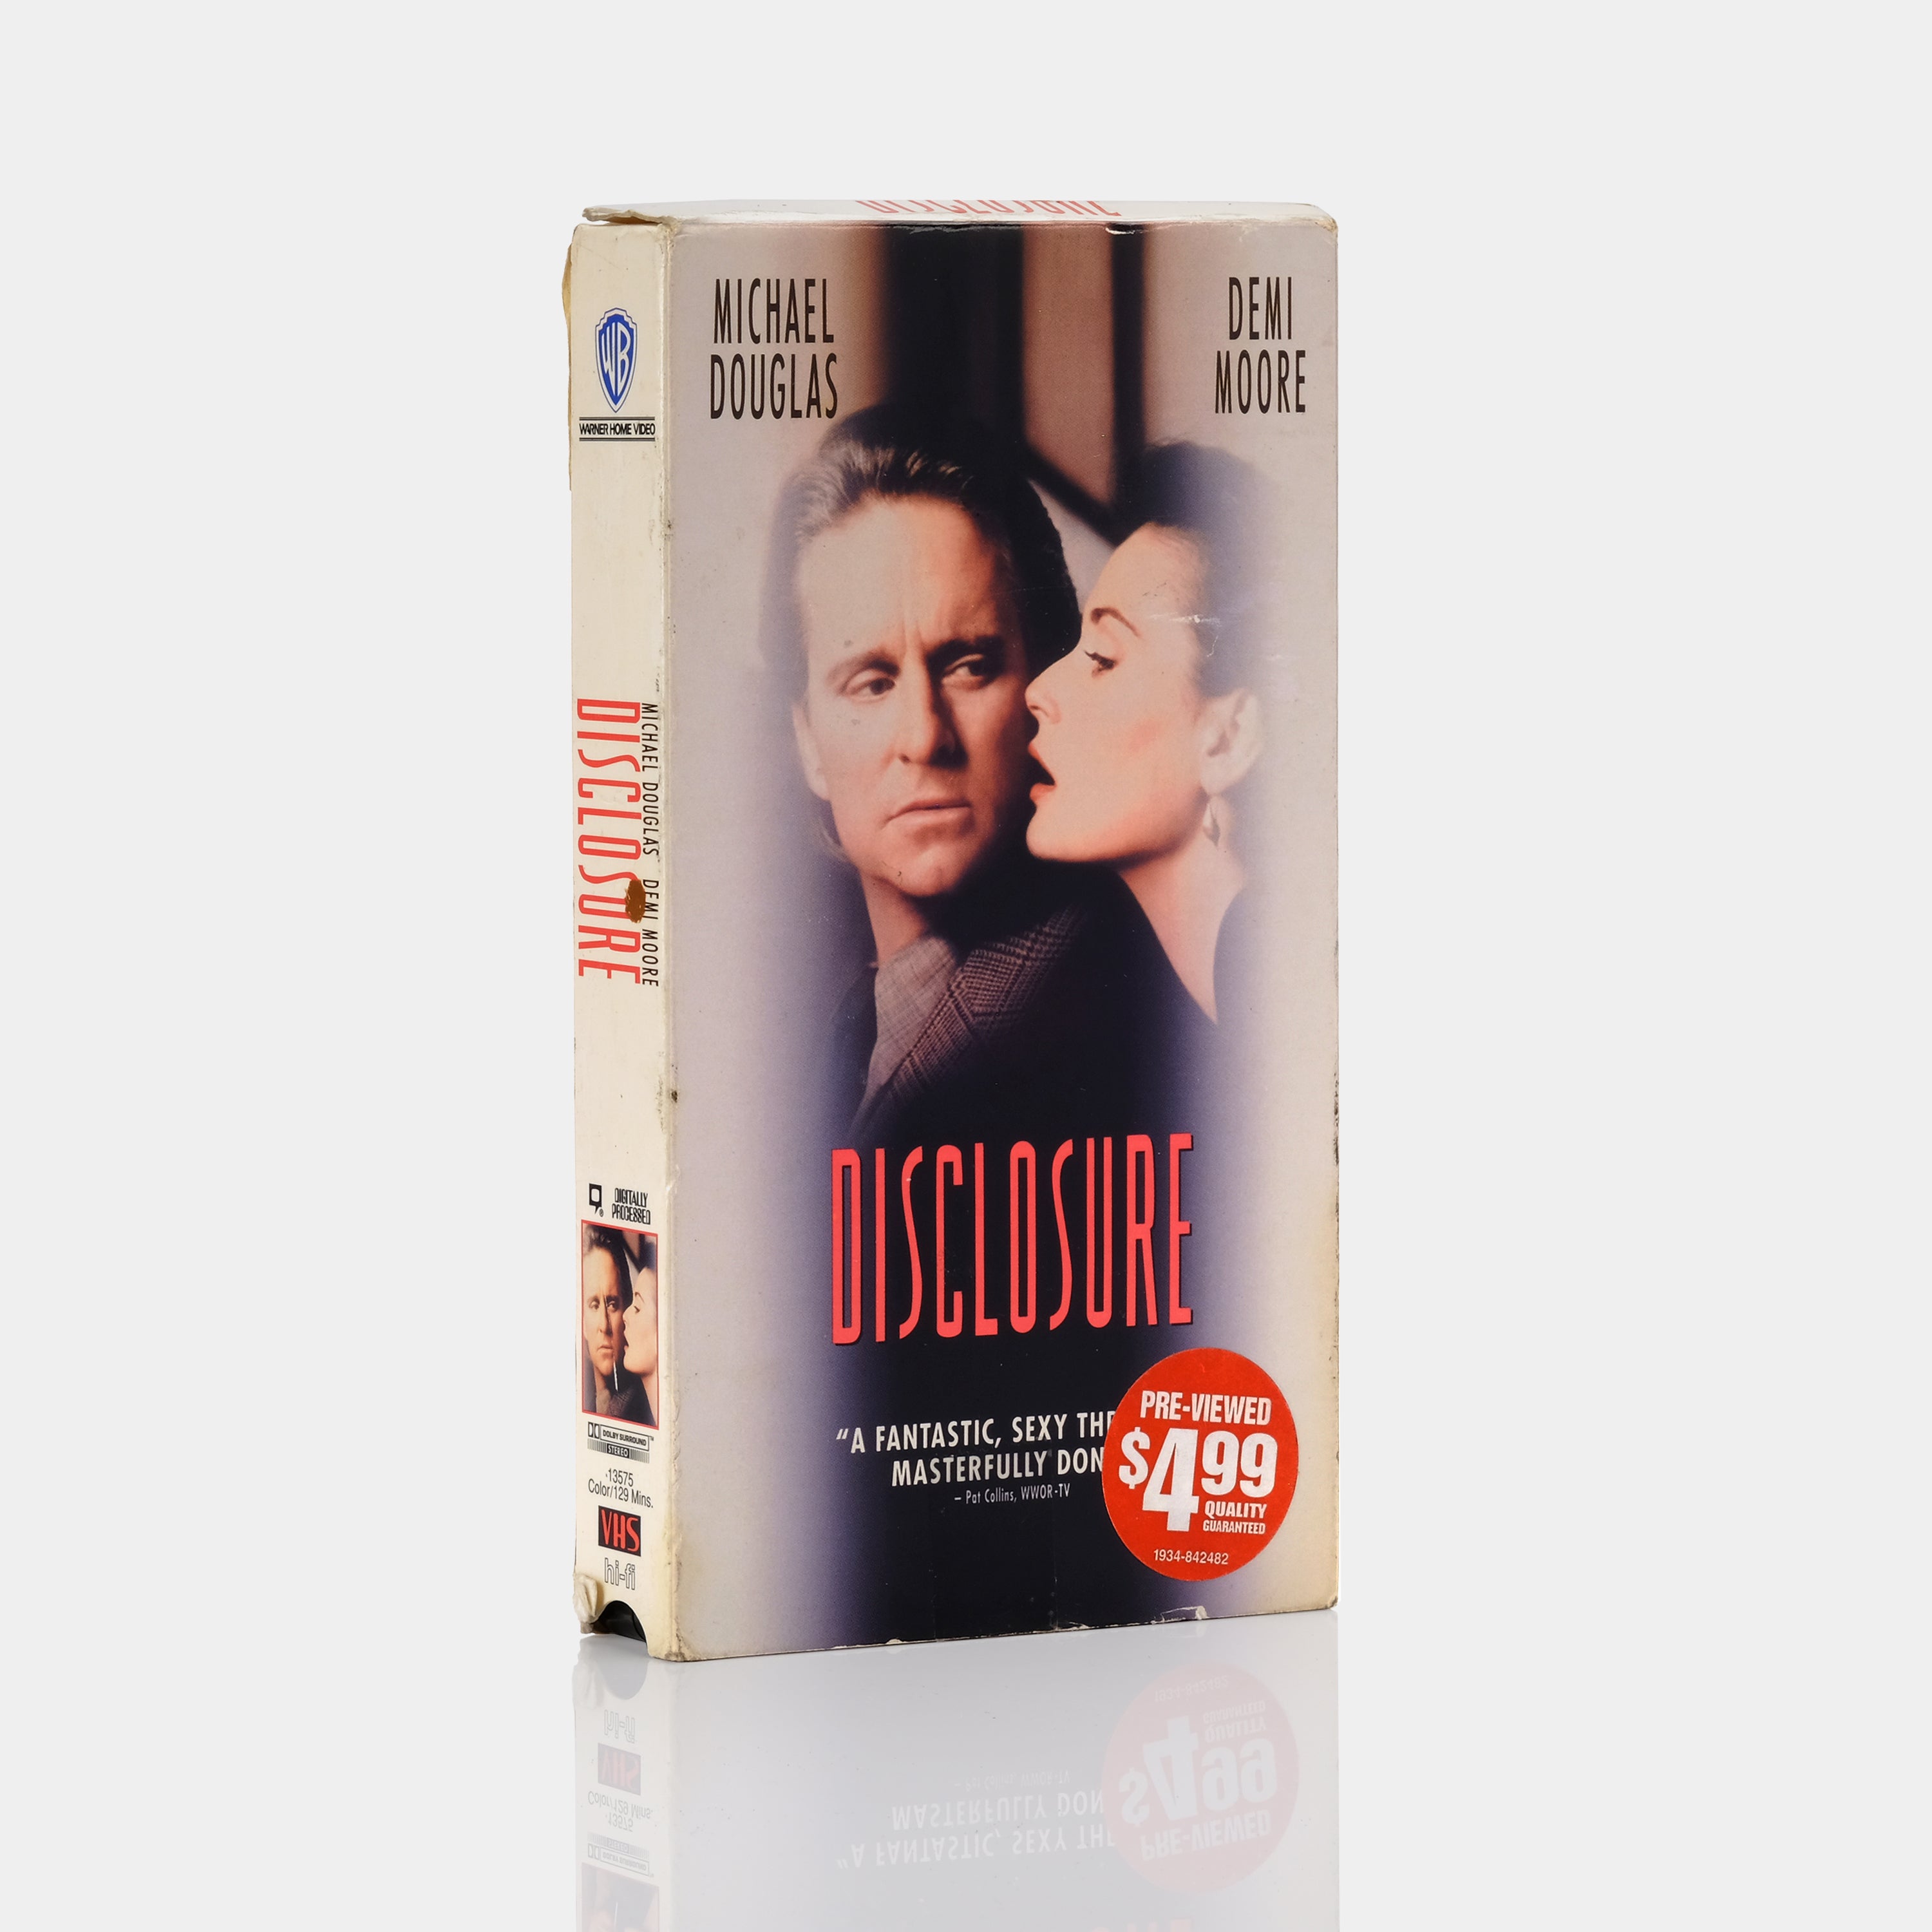 Disclosure VHS Tape